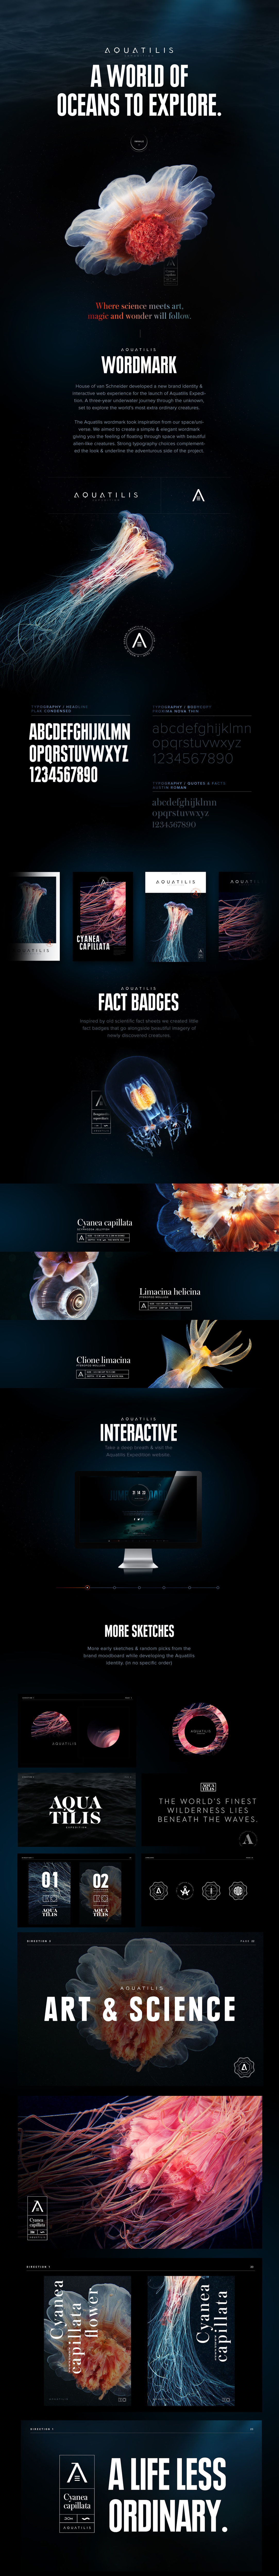 aquatilis expedition aquatilis expedition Ocean oceans jellyfish plankton deep blue sea alien diving marine science adventure